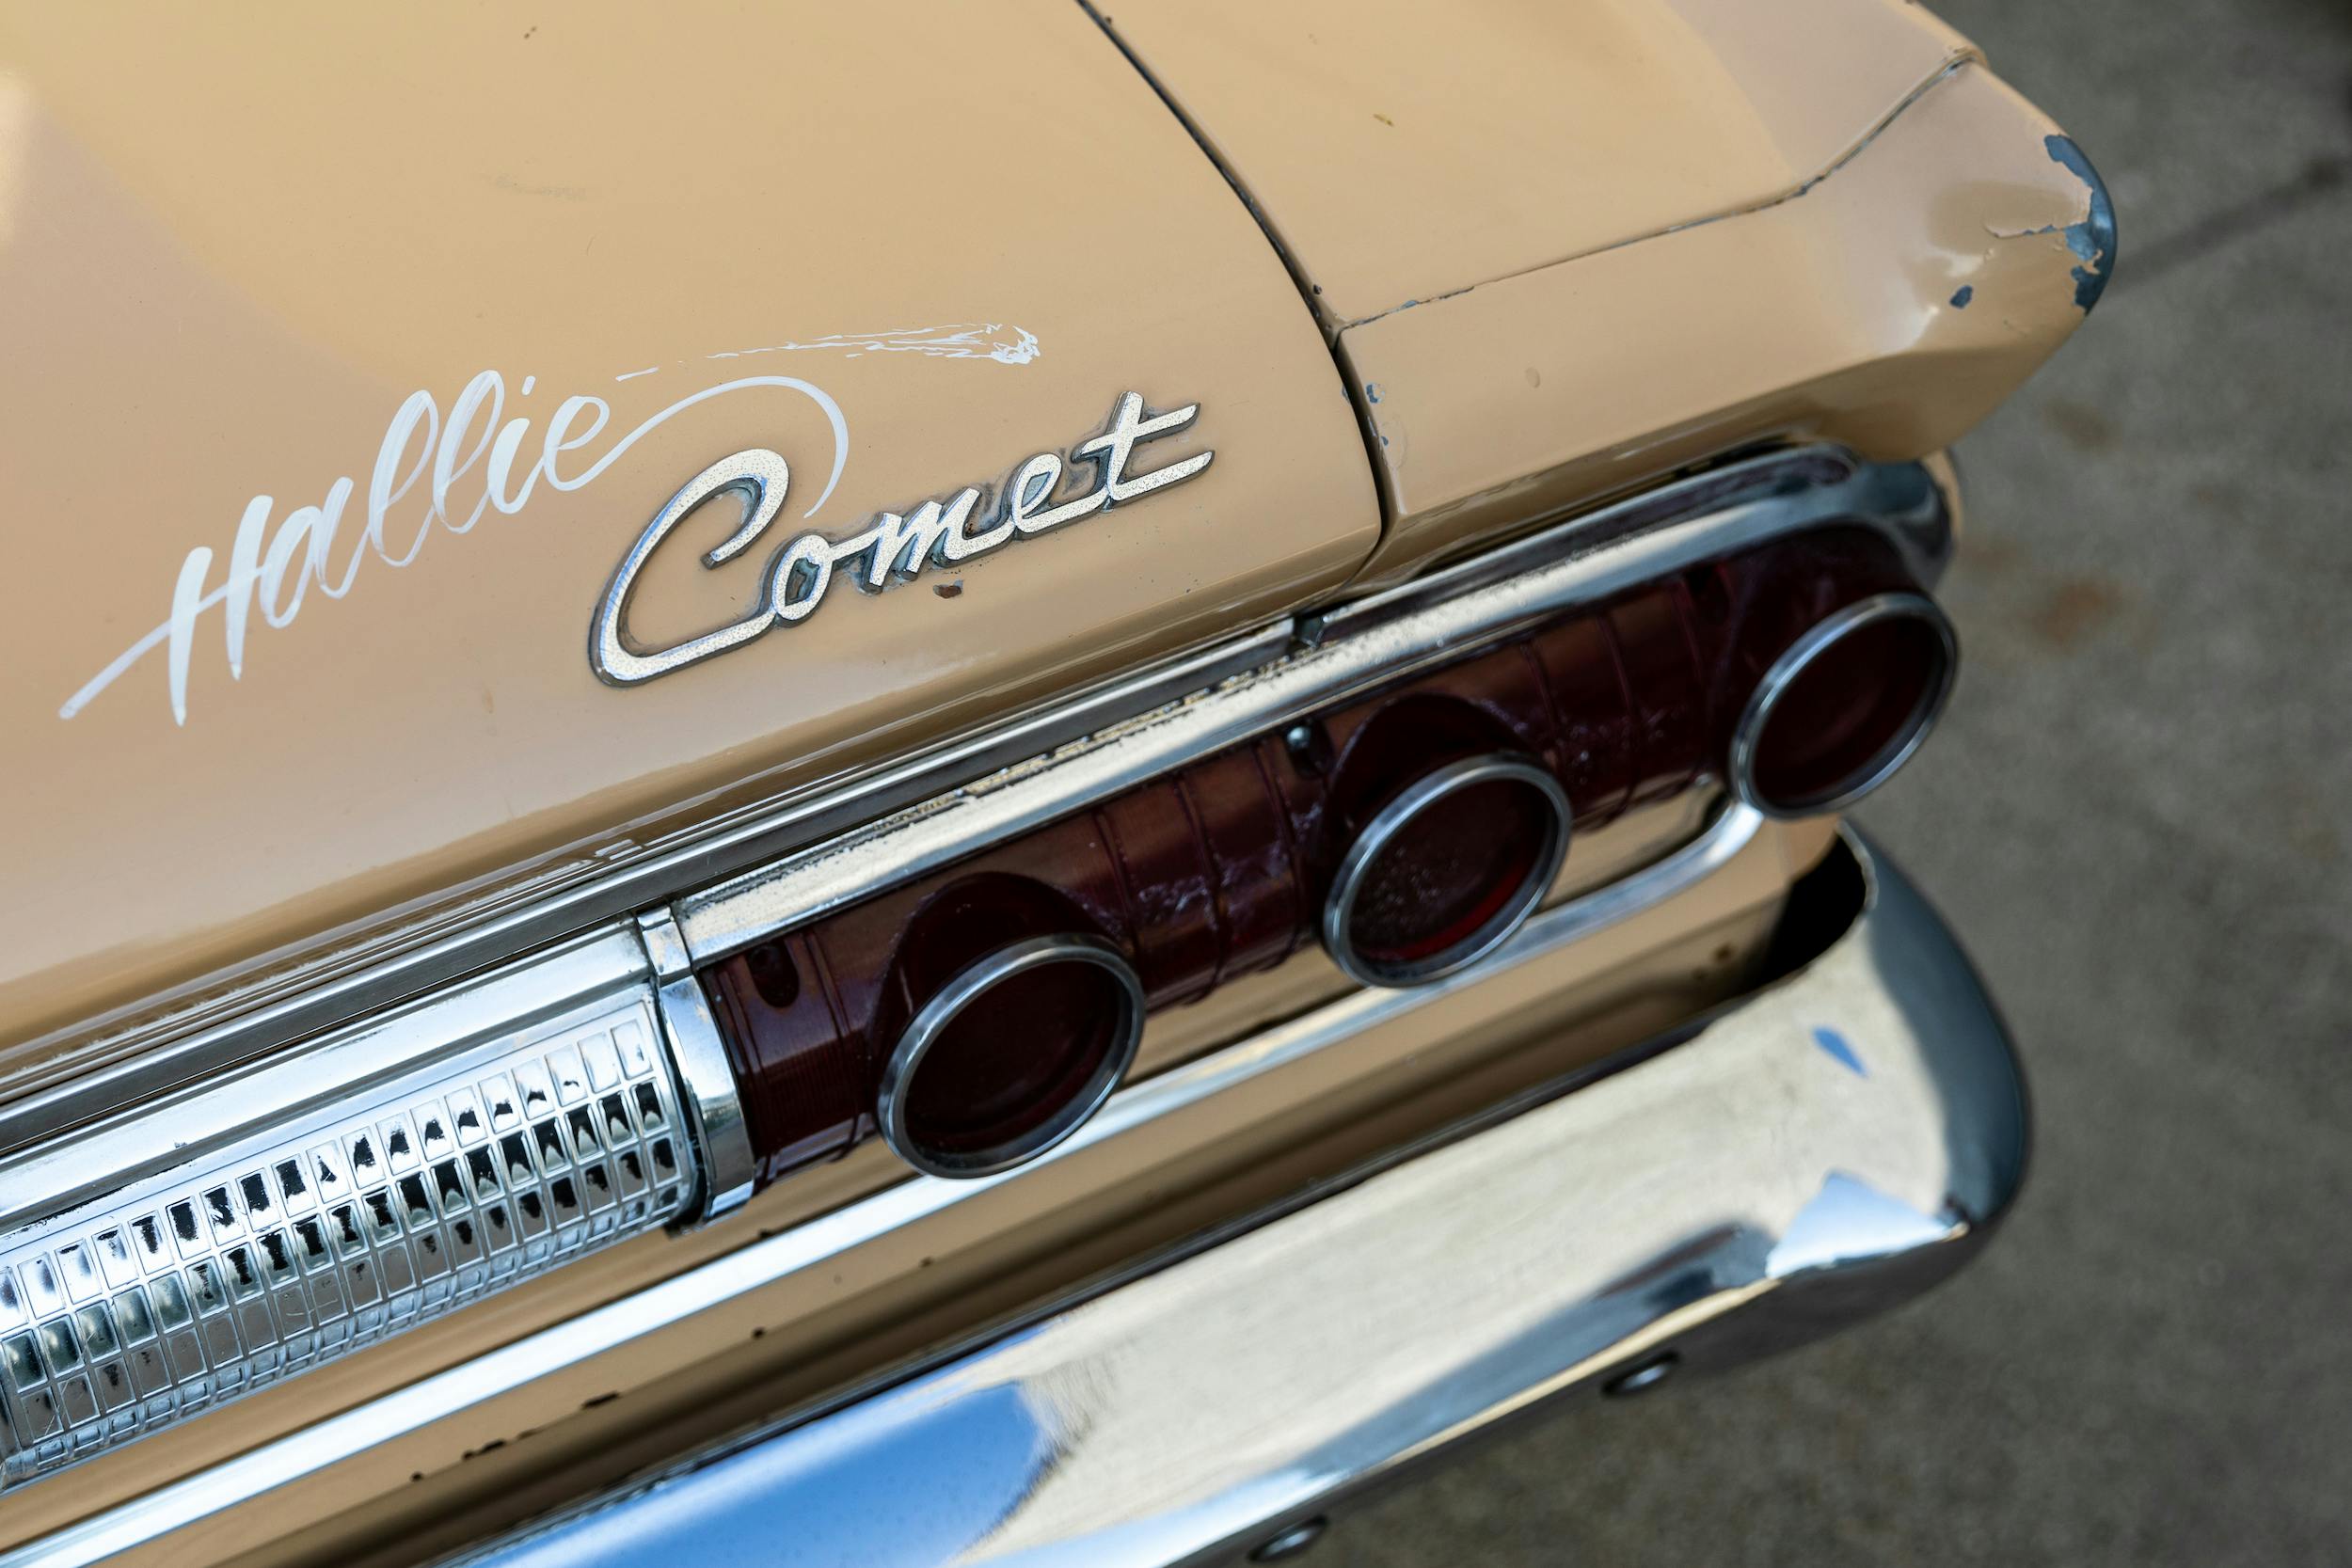 1964 Mercury Comet taillight